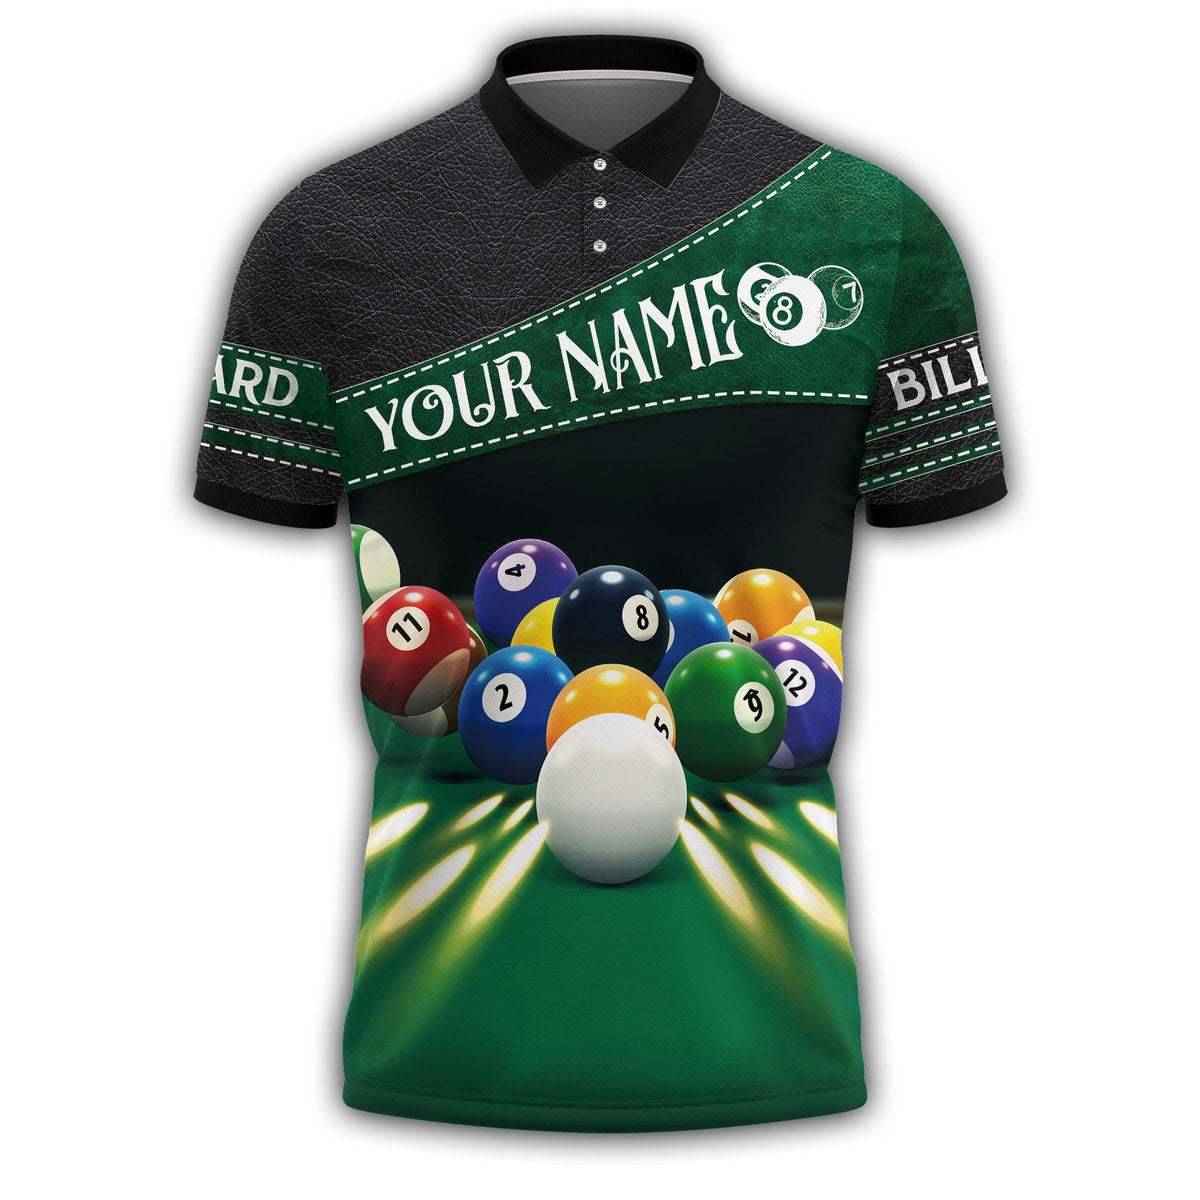 Custom Your Name Leather Billiard Polo Shirt/ Best Personalized Billiard Shirt for Men Women